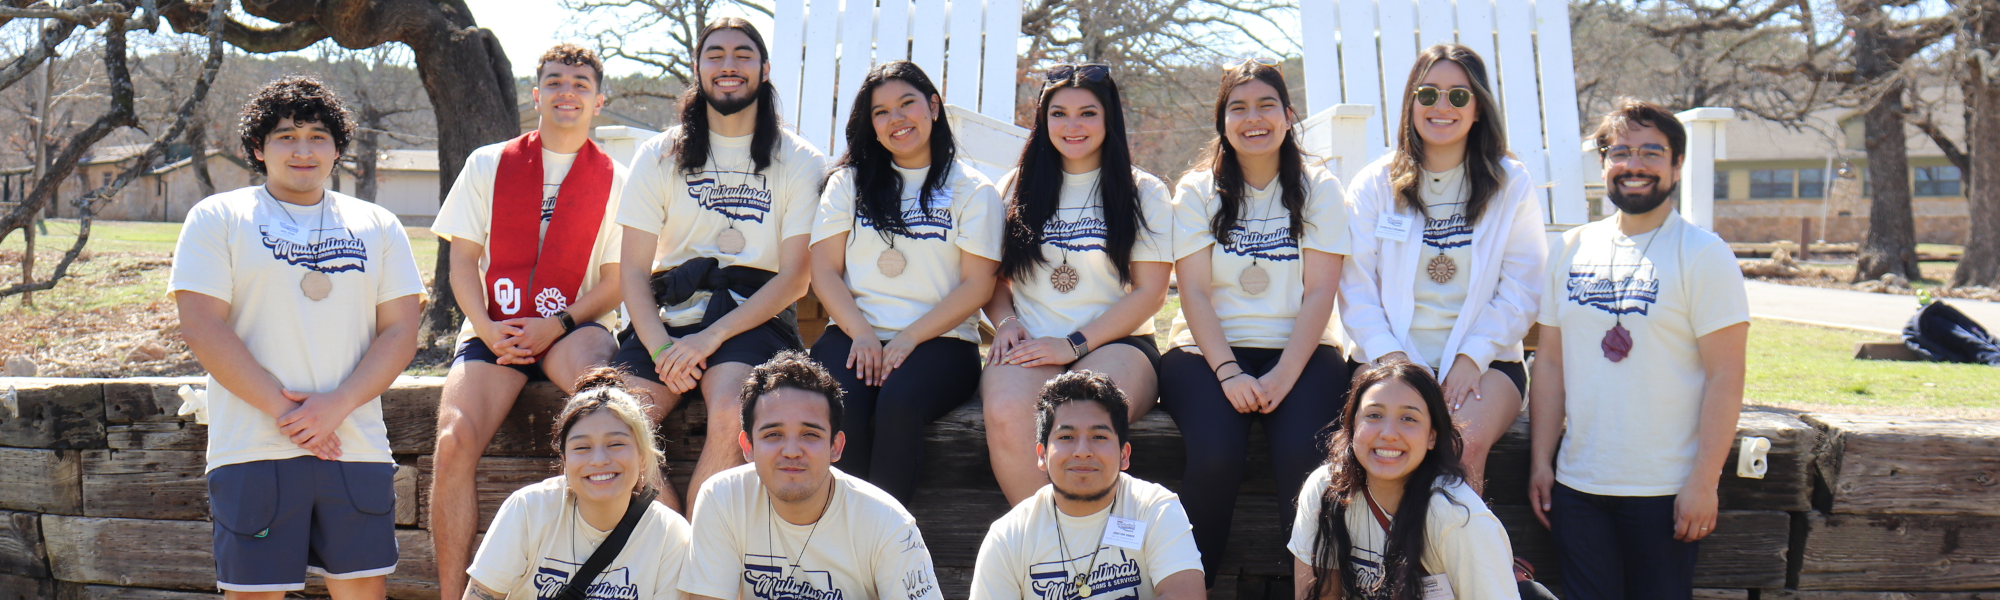 The Hispanic American Student Association executive team at a retreat.